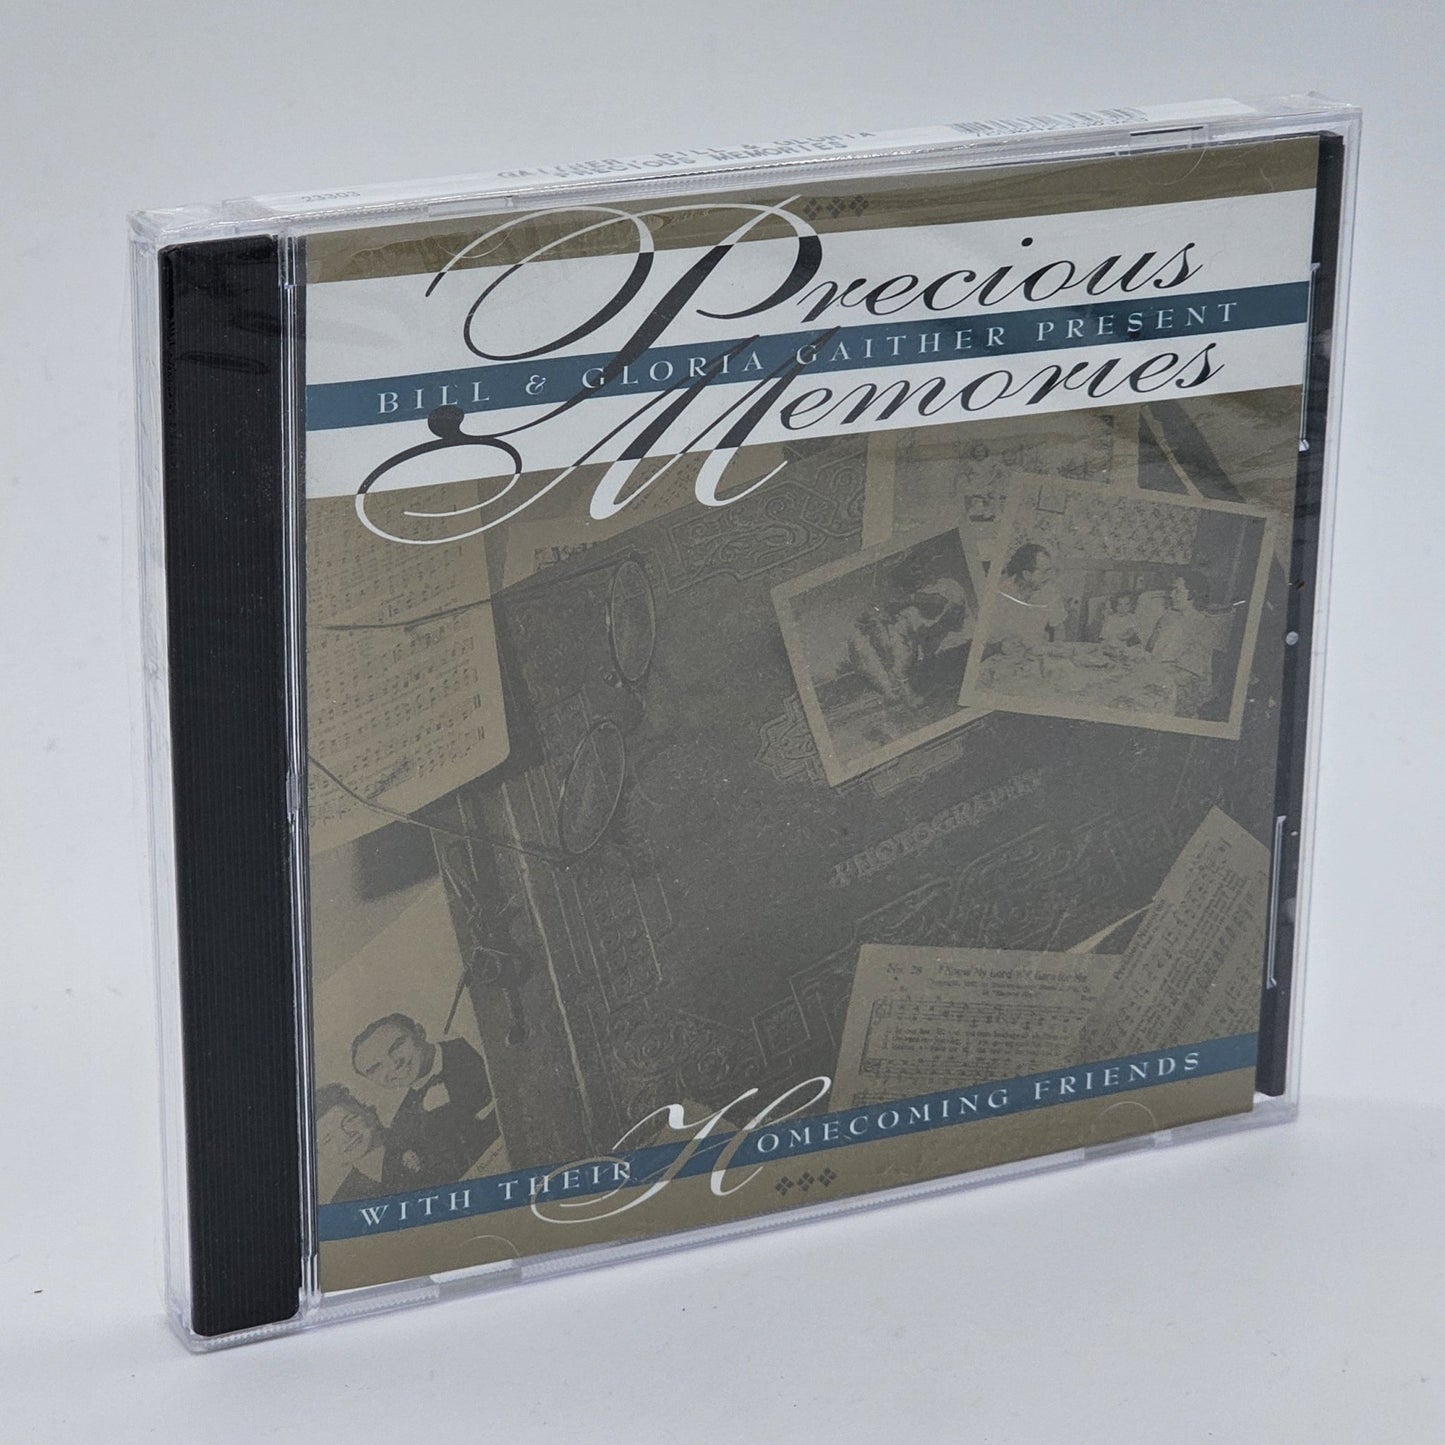 Spring House Music Group - Bill & Gloria Gaither Present Precious Memories | CD - Compact Disc - Steady Bunny Shop